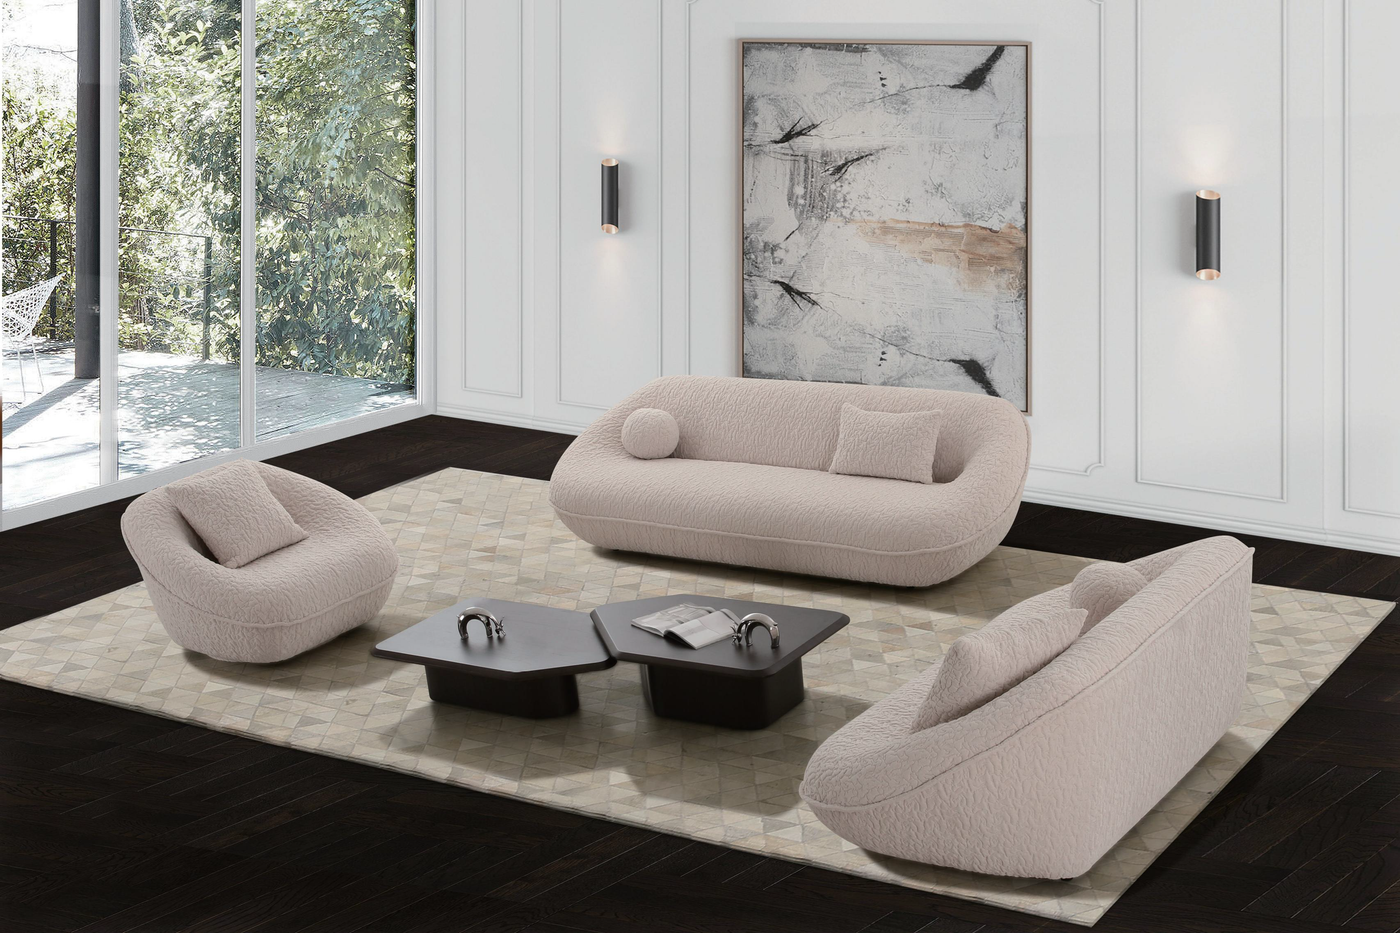 Tamarama Chair - Future Classics Furniture